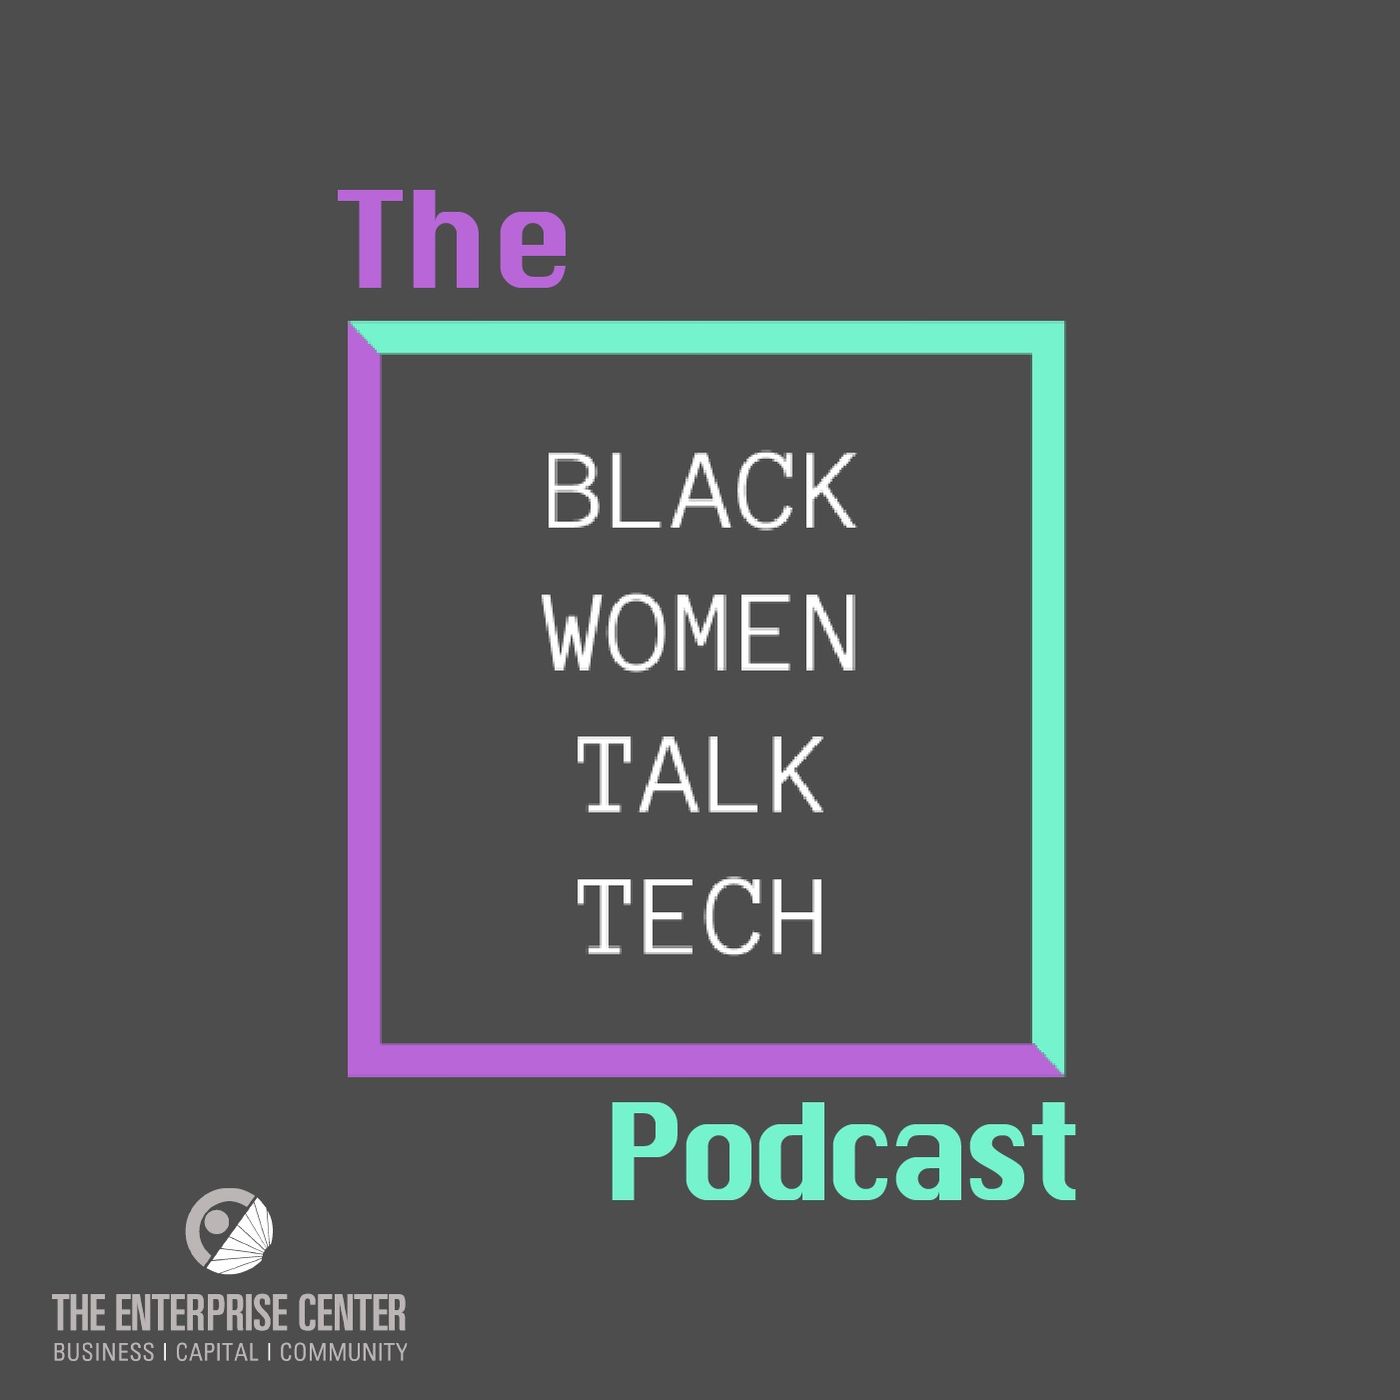 Black Women Talk Tech Podcast podcast show image